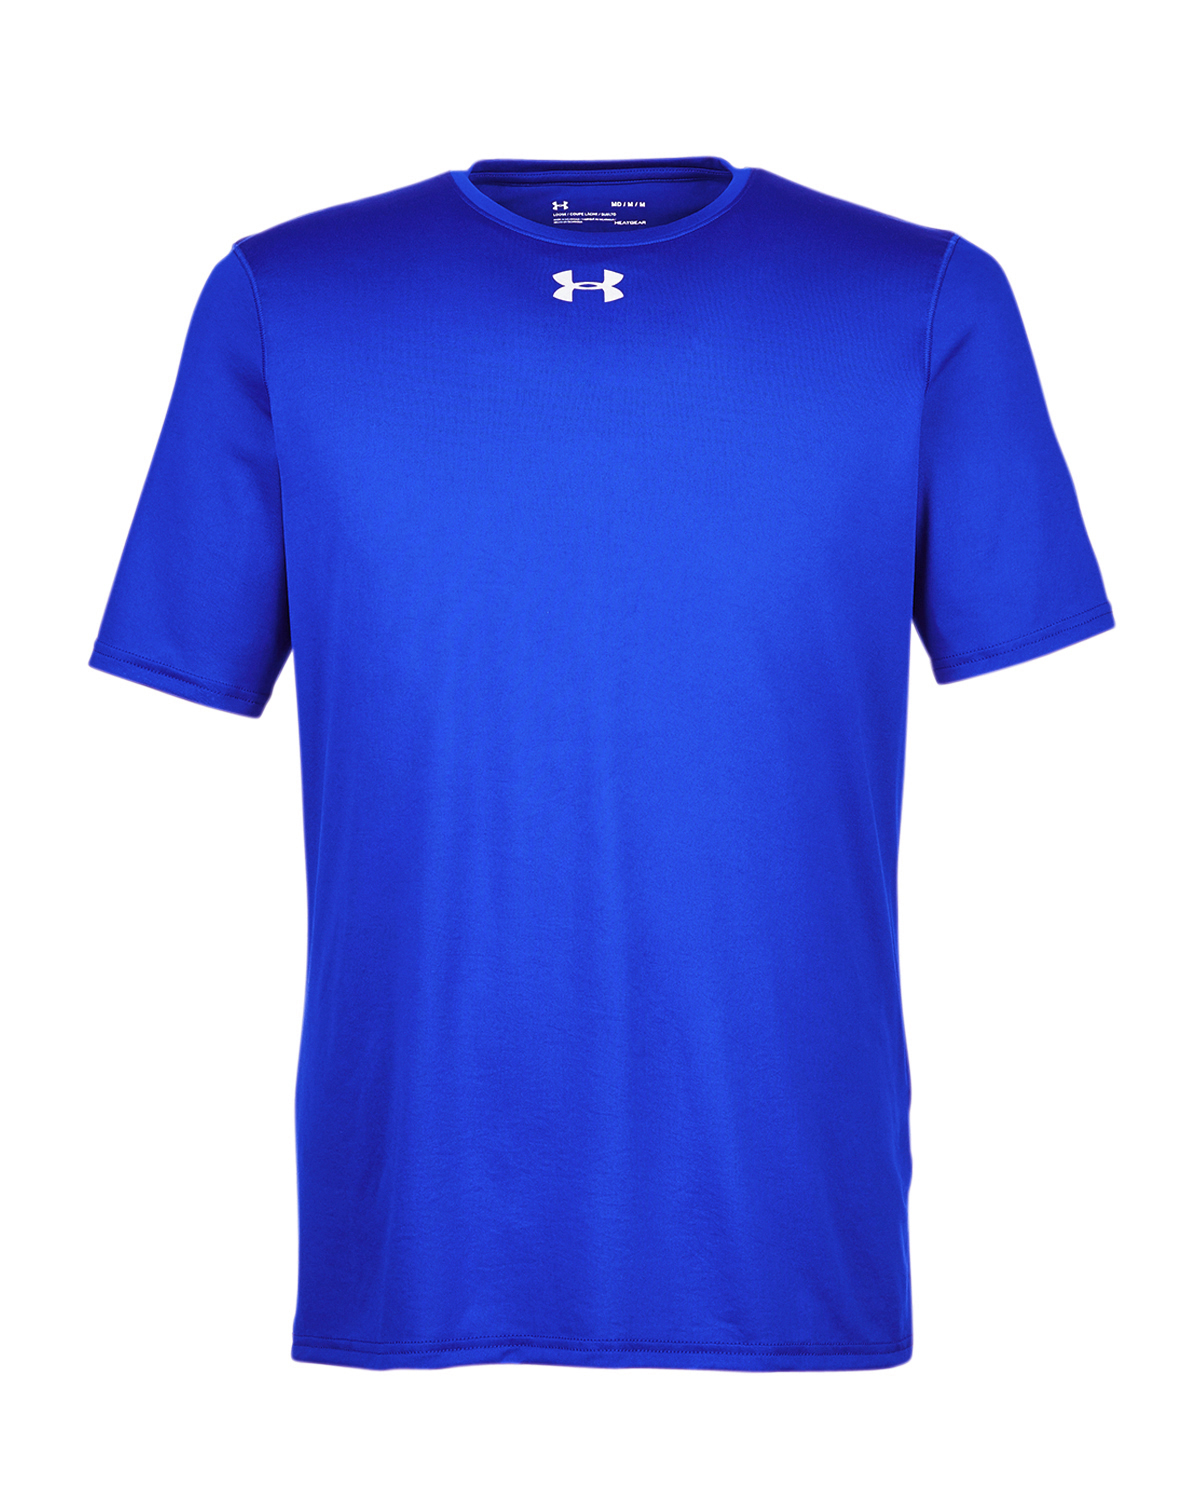 Sport Under Armour Men's Locker T-Shirt 2.0 FREE SHIPPING 1305775+ NEW 